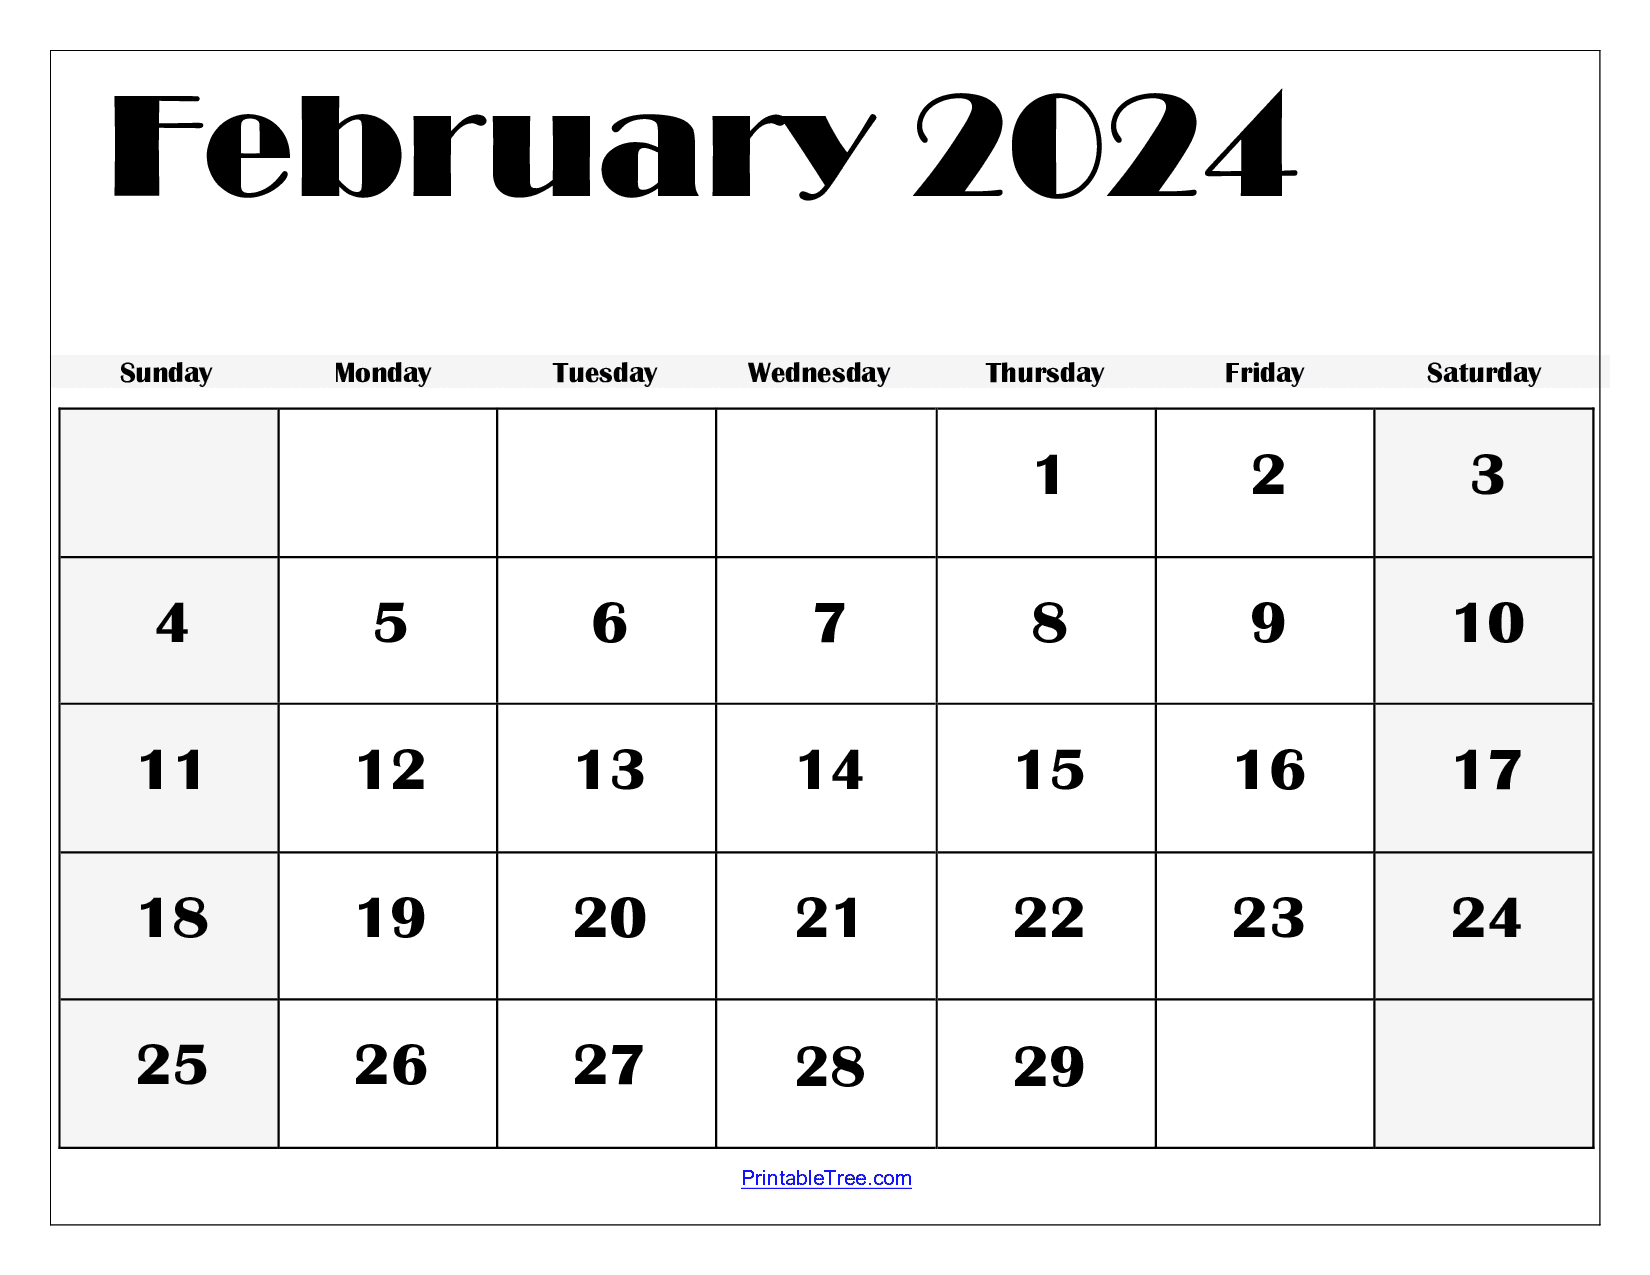 February 2024 Calendar Printable Pdf Template With Holidays for Printable 2024 February Calendar